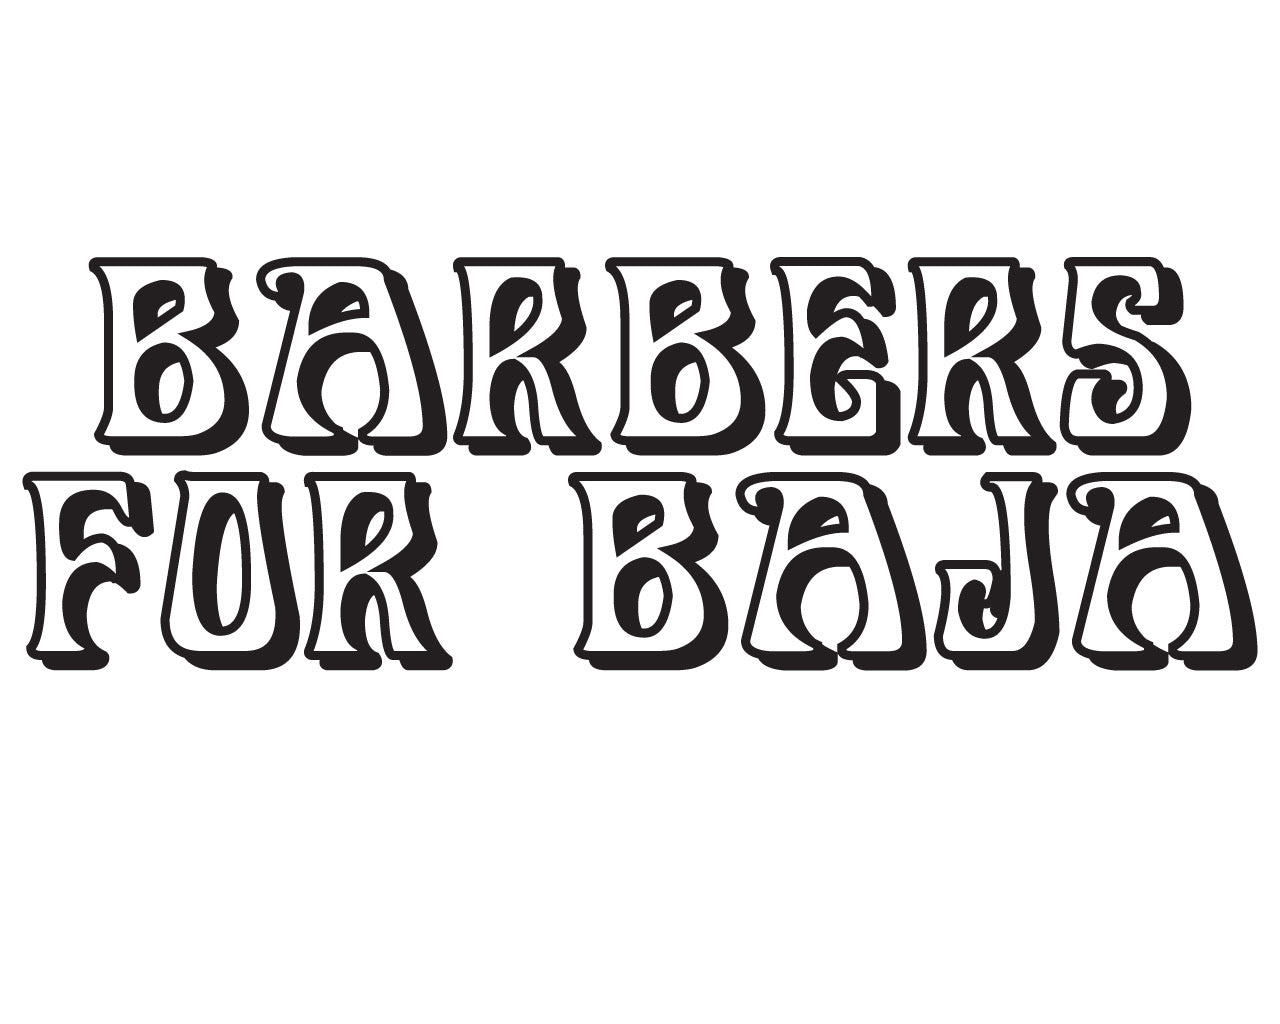 barbers-for-baja